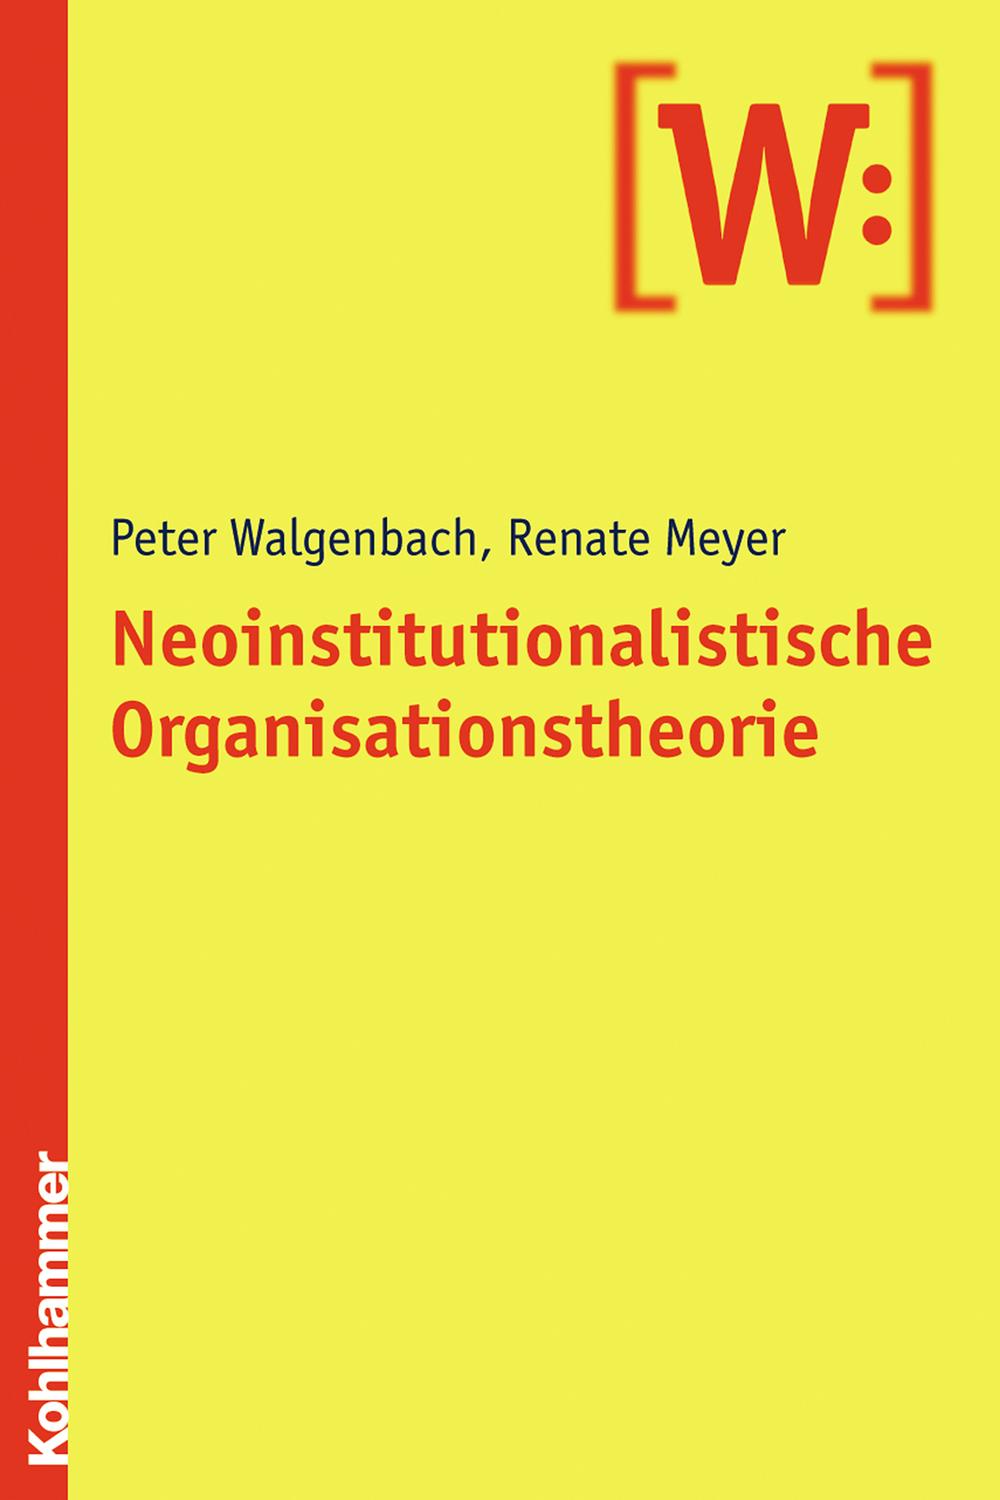 Neoinstitutionalistische Organisationstheorie - Peter Walgenbach, Renate Meyer,,